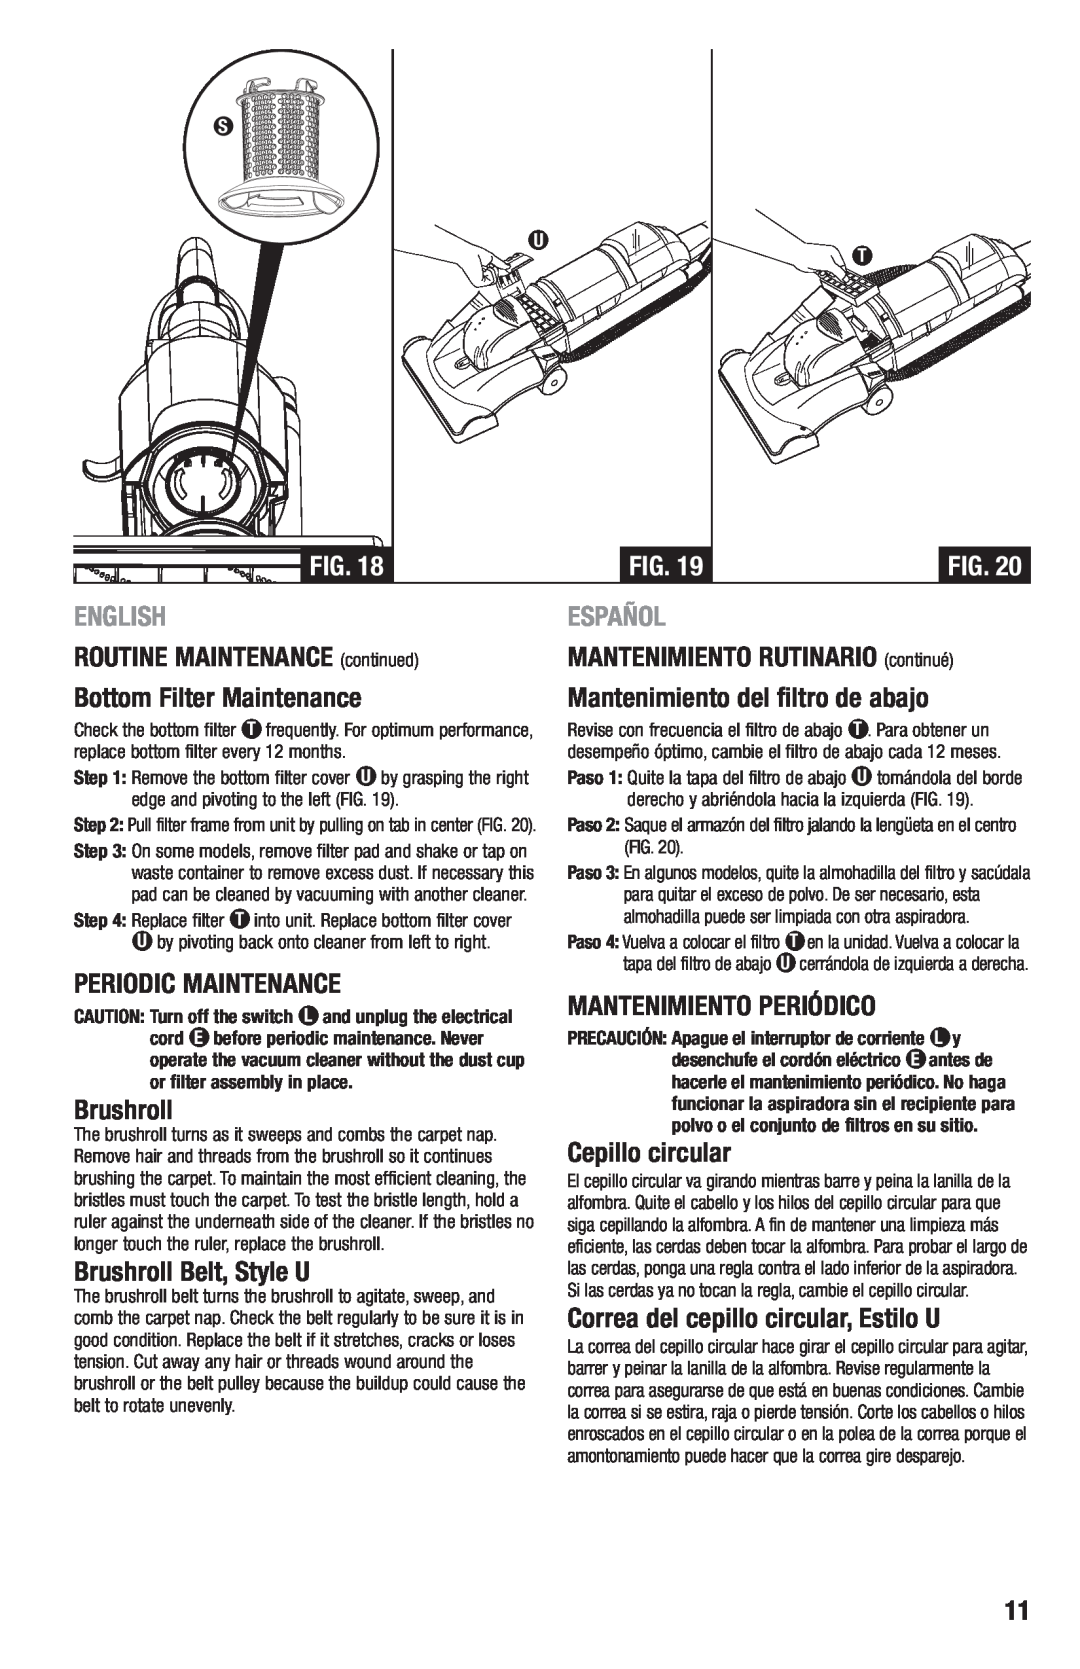 Eureka 2970-2999 Series manual English, ROUTINE MAINTENANCE continued Bottom Filter Maintenance, Español 